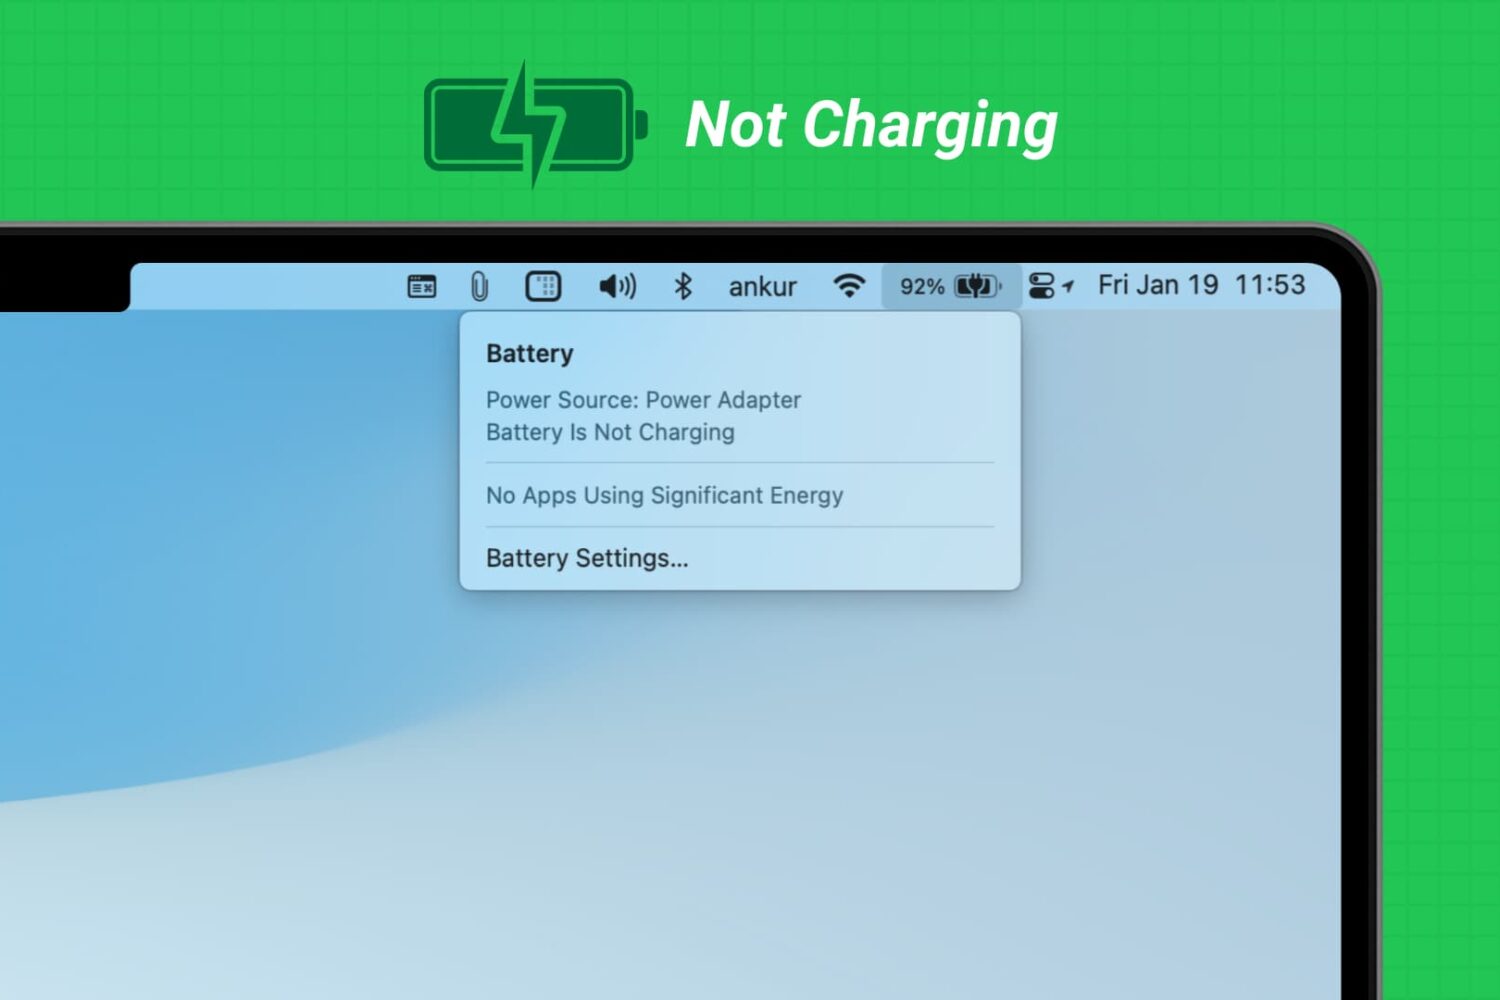 MacBook battery is not charging message